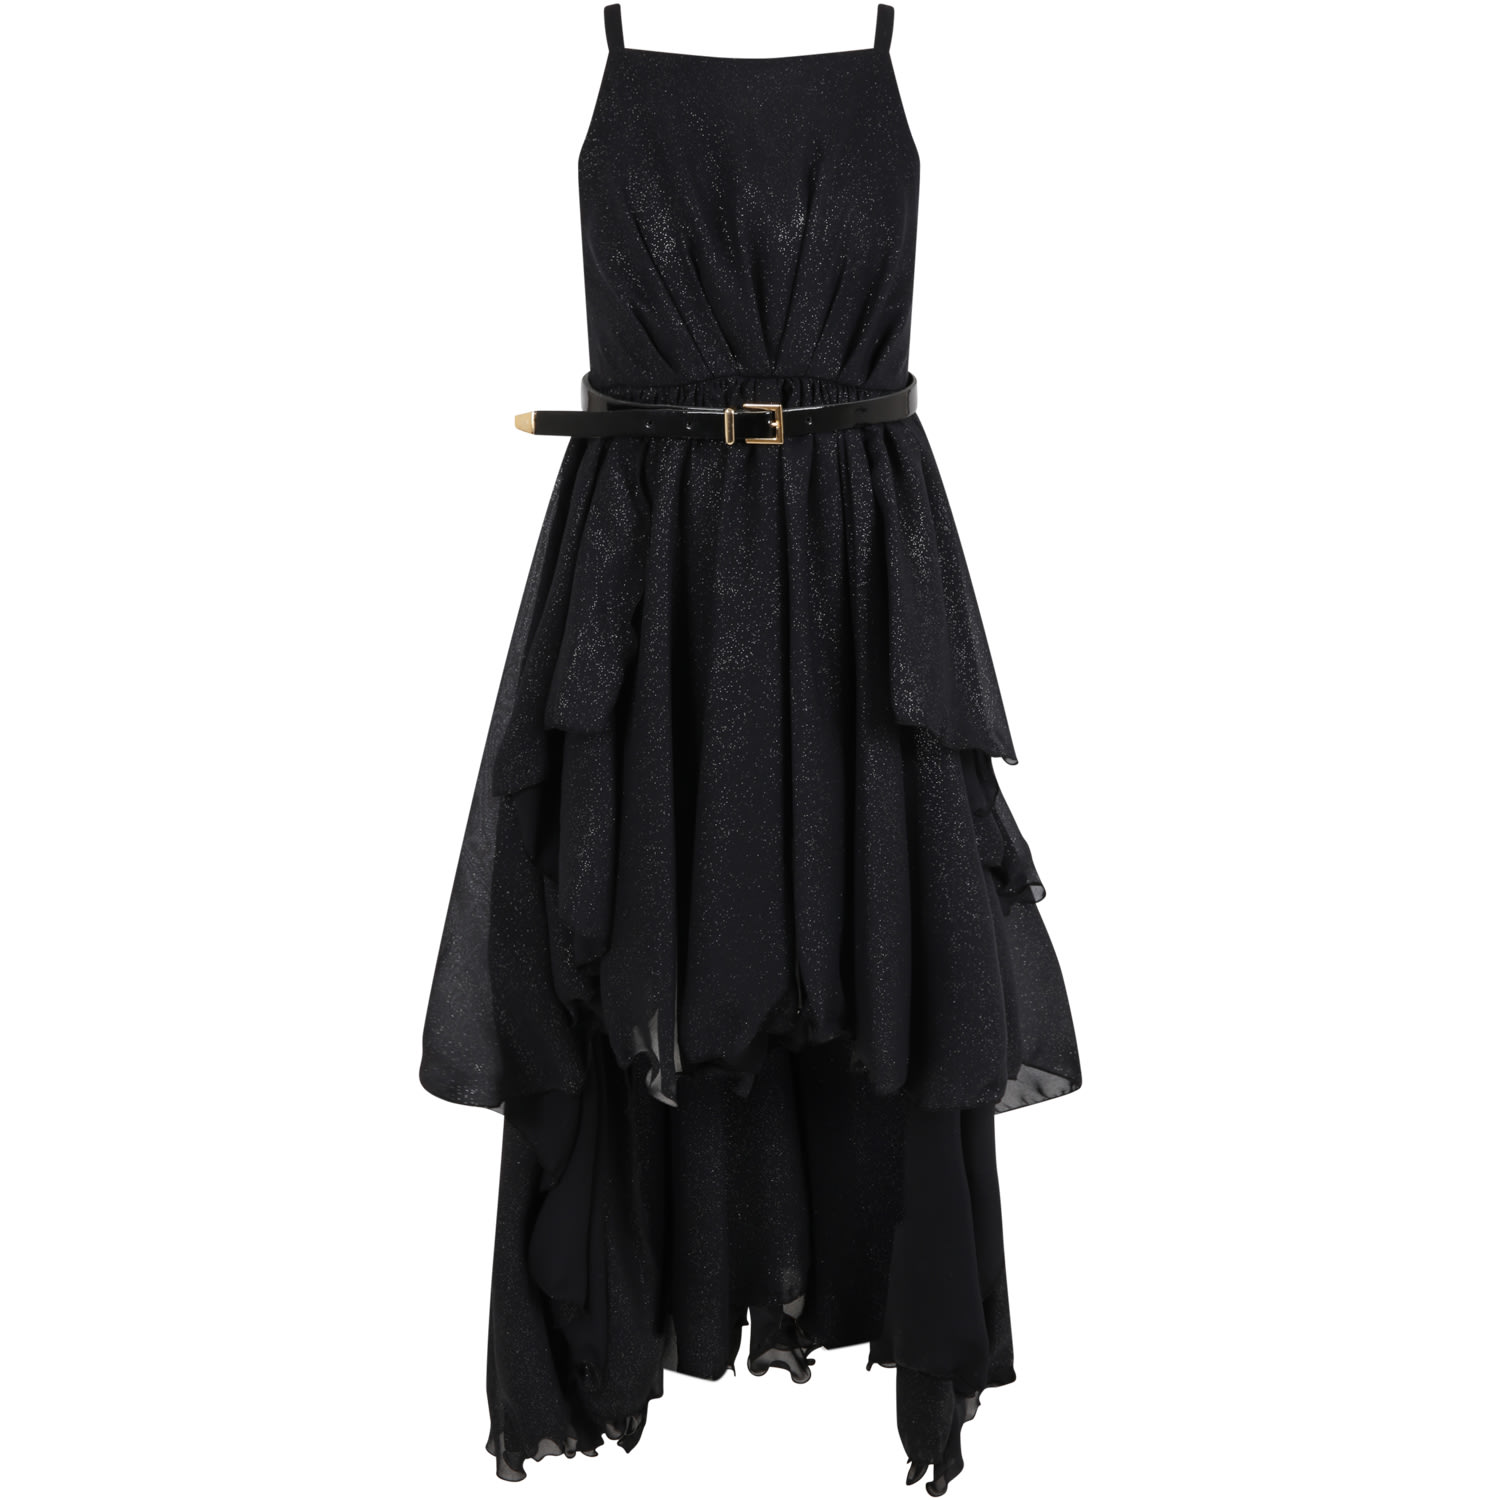 Le Gemelline by Feleppa Black Dress For Girl